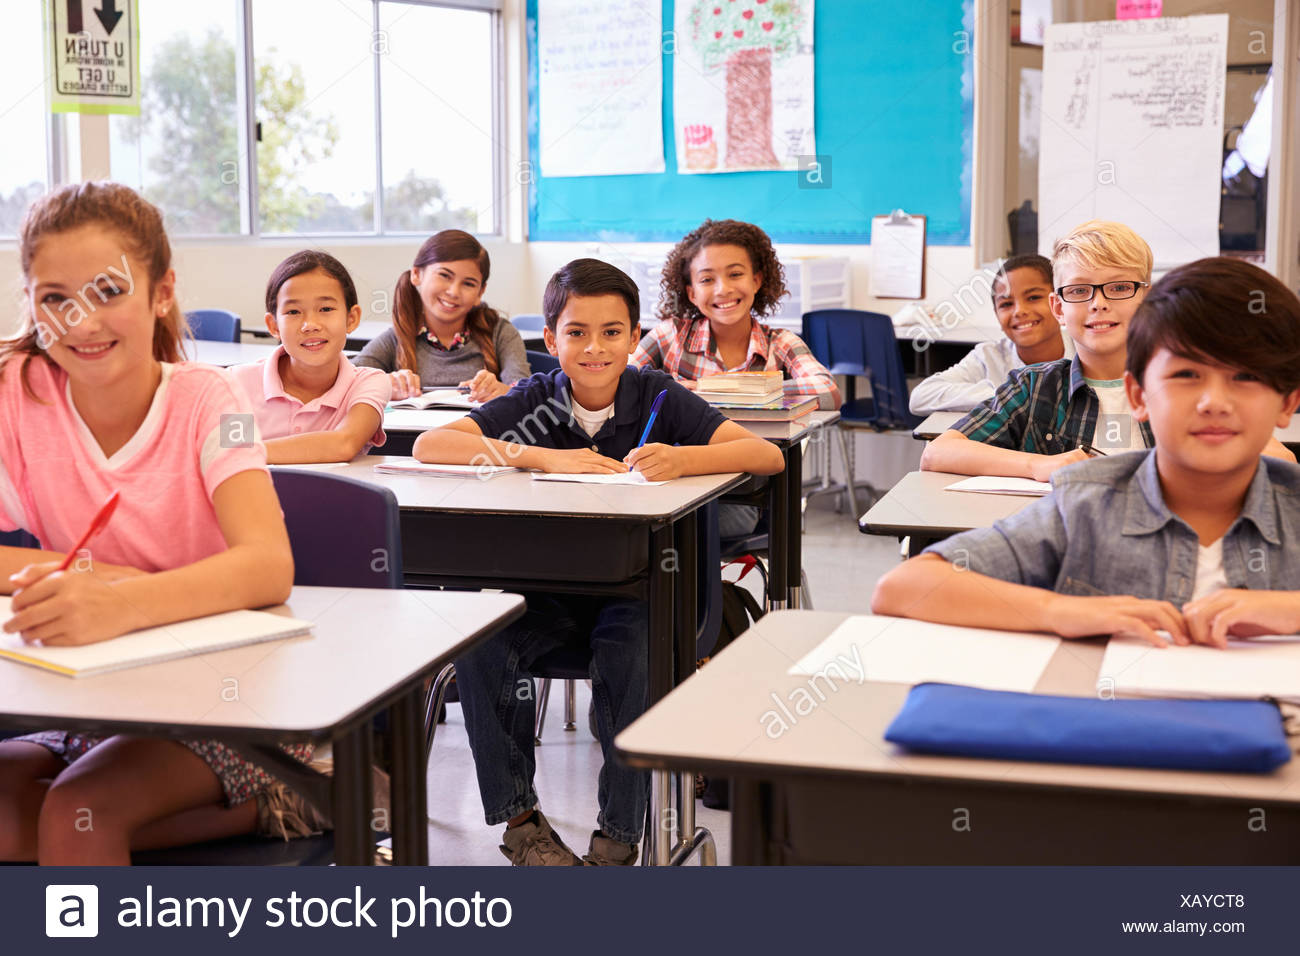 kids classroom desk